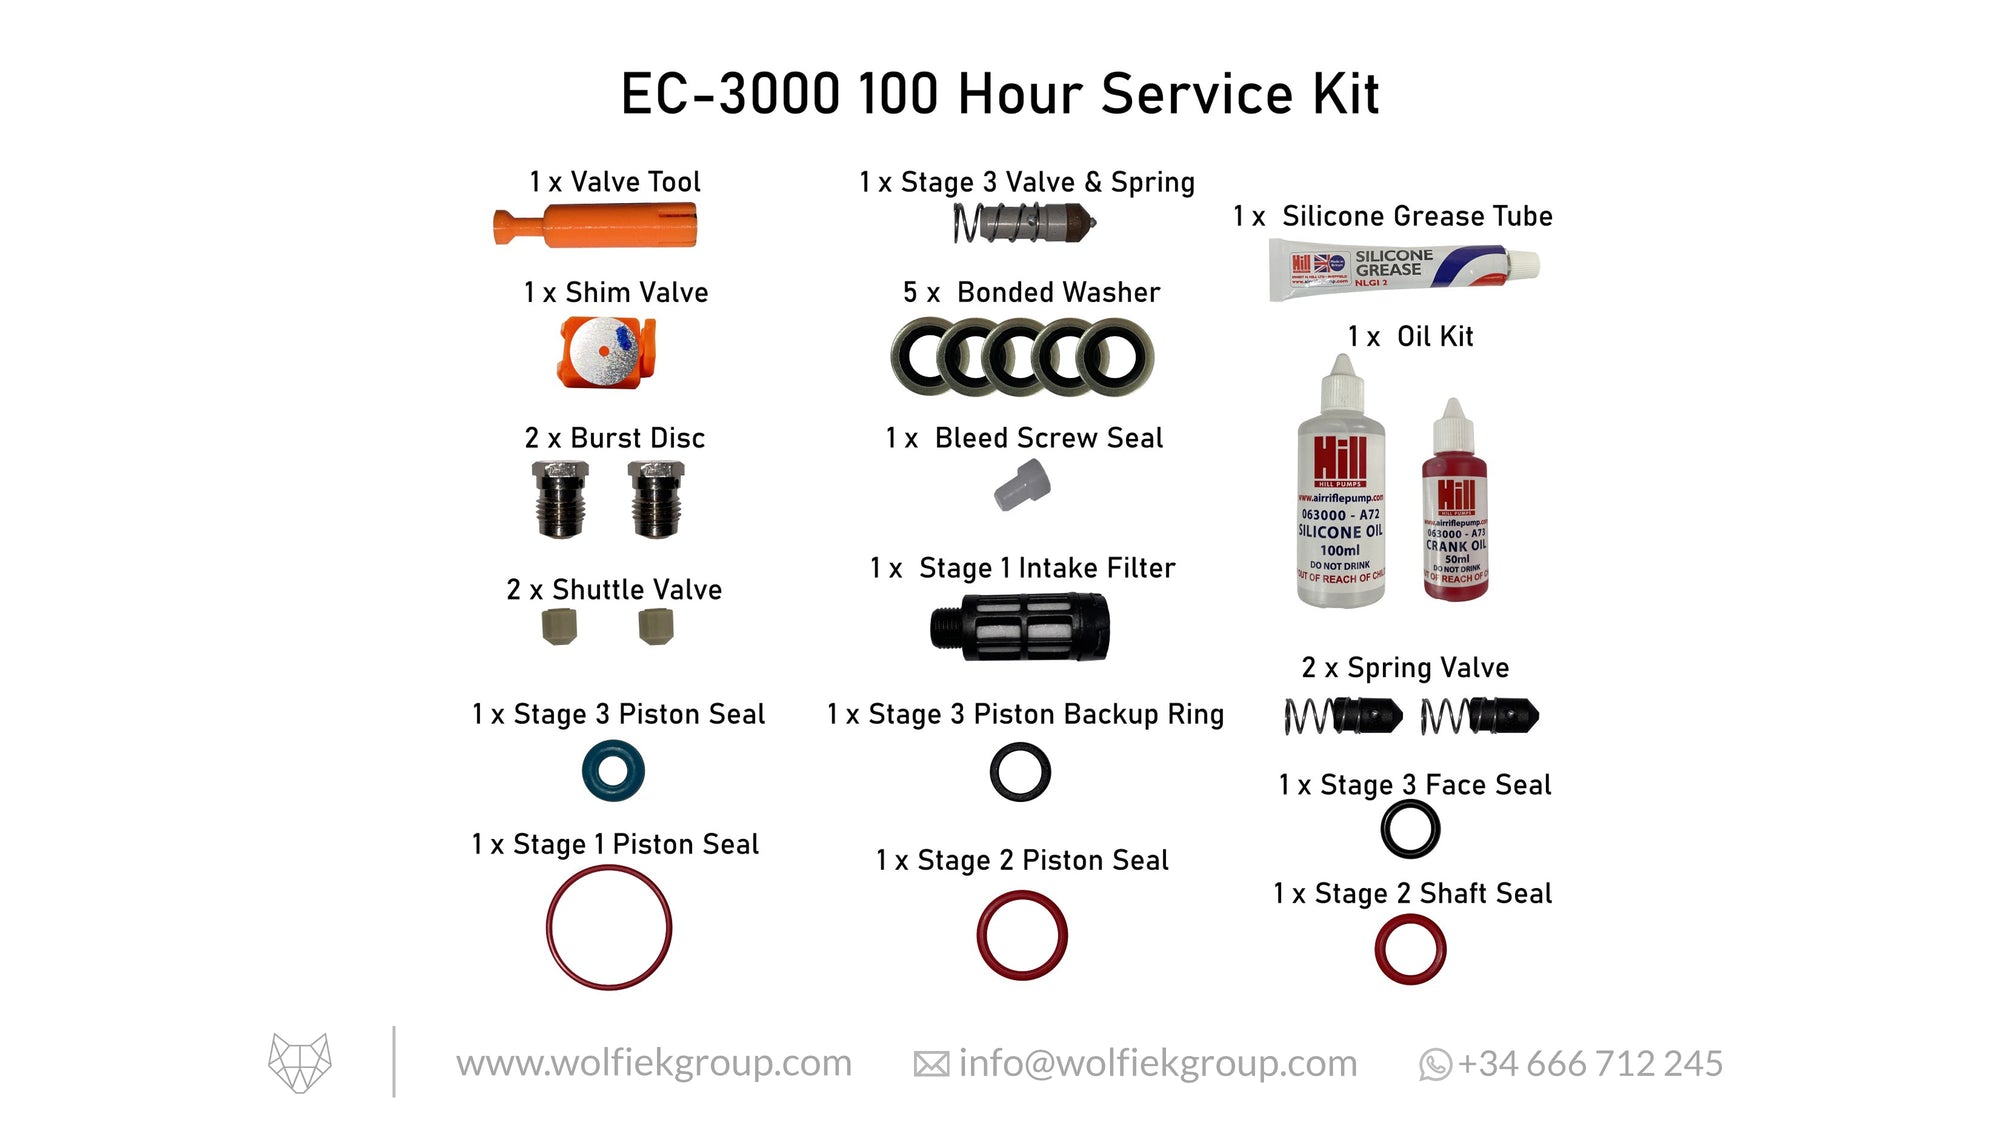 Hill EC-3000 100 Hour Service Kit